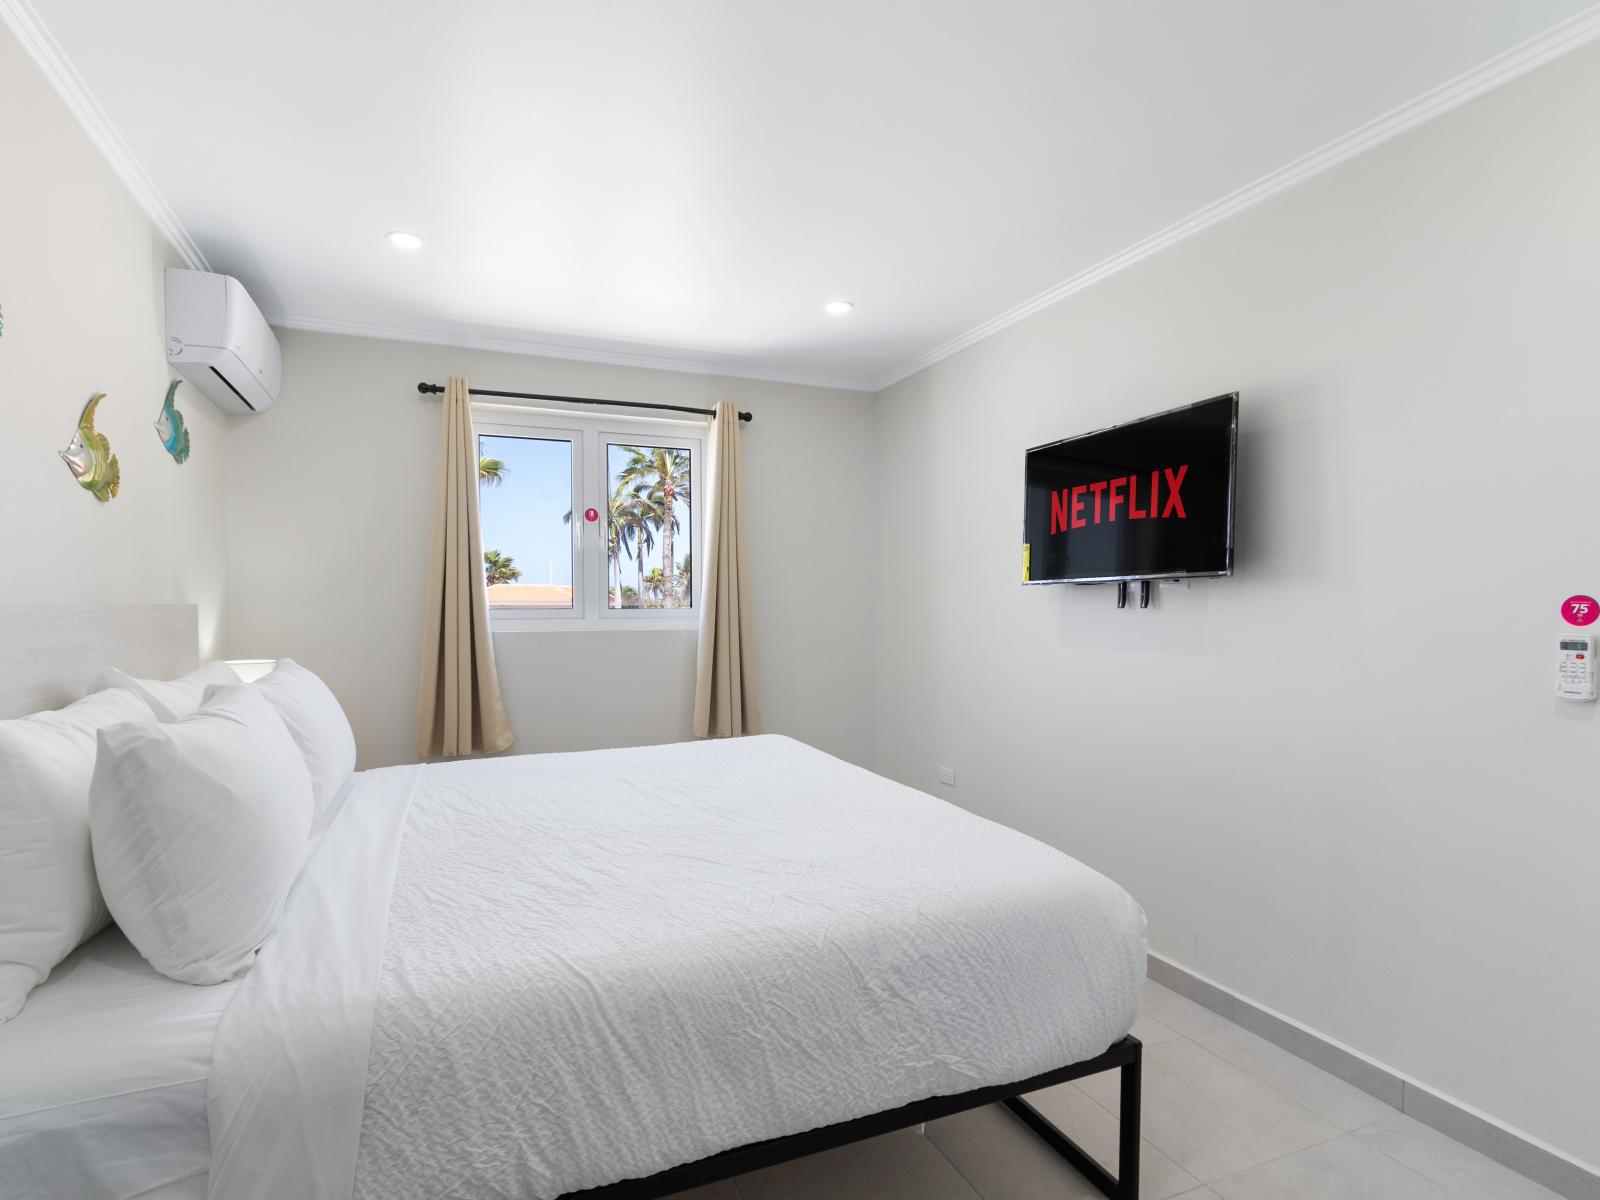 Bedroom 1 features a King bed, smart TV and an en-suite bathroom